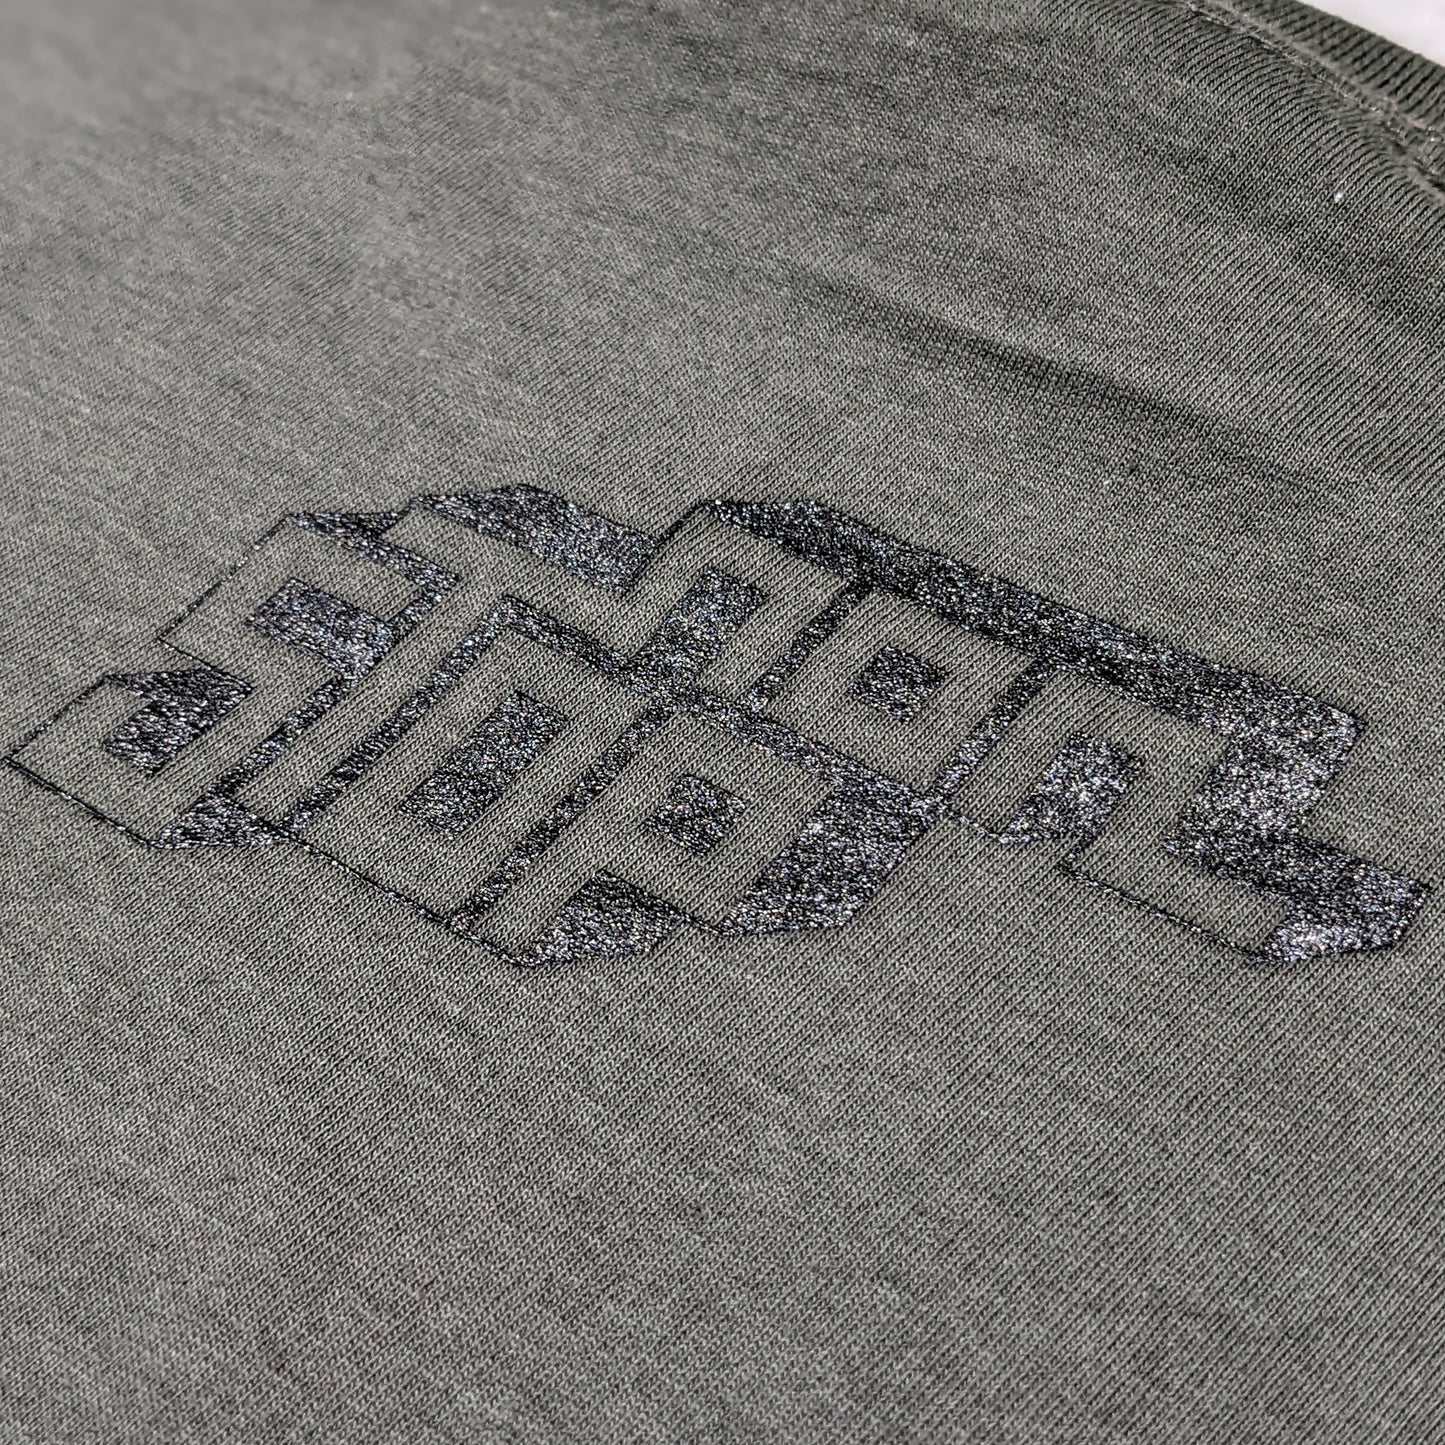 Nonstop T-Shirt Logo - graphite grey